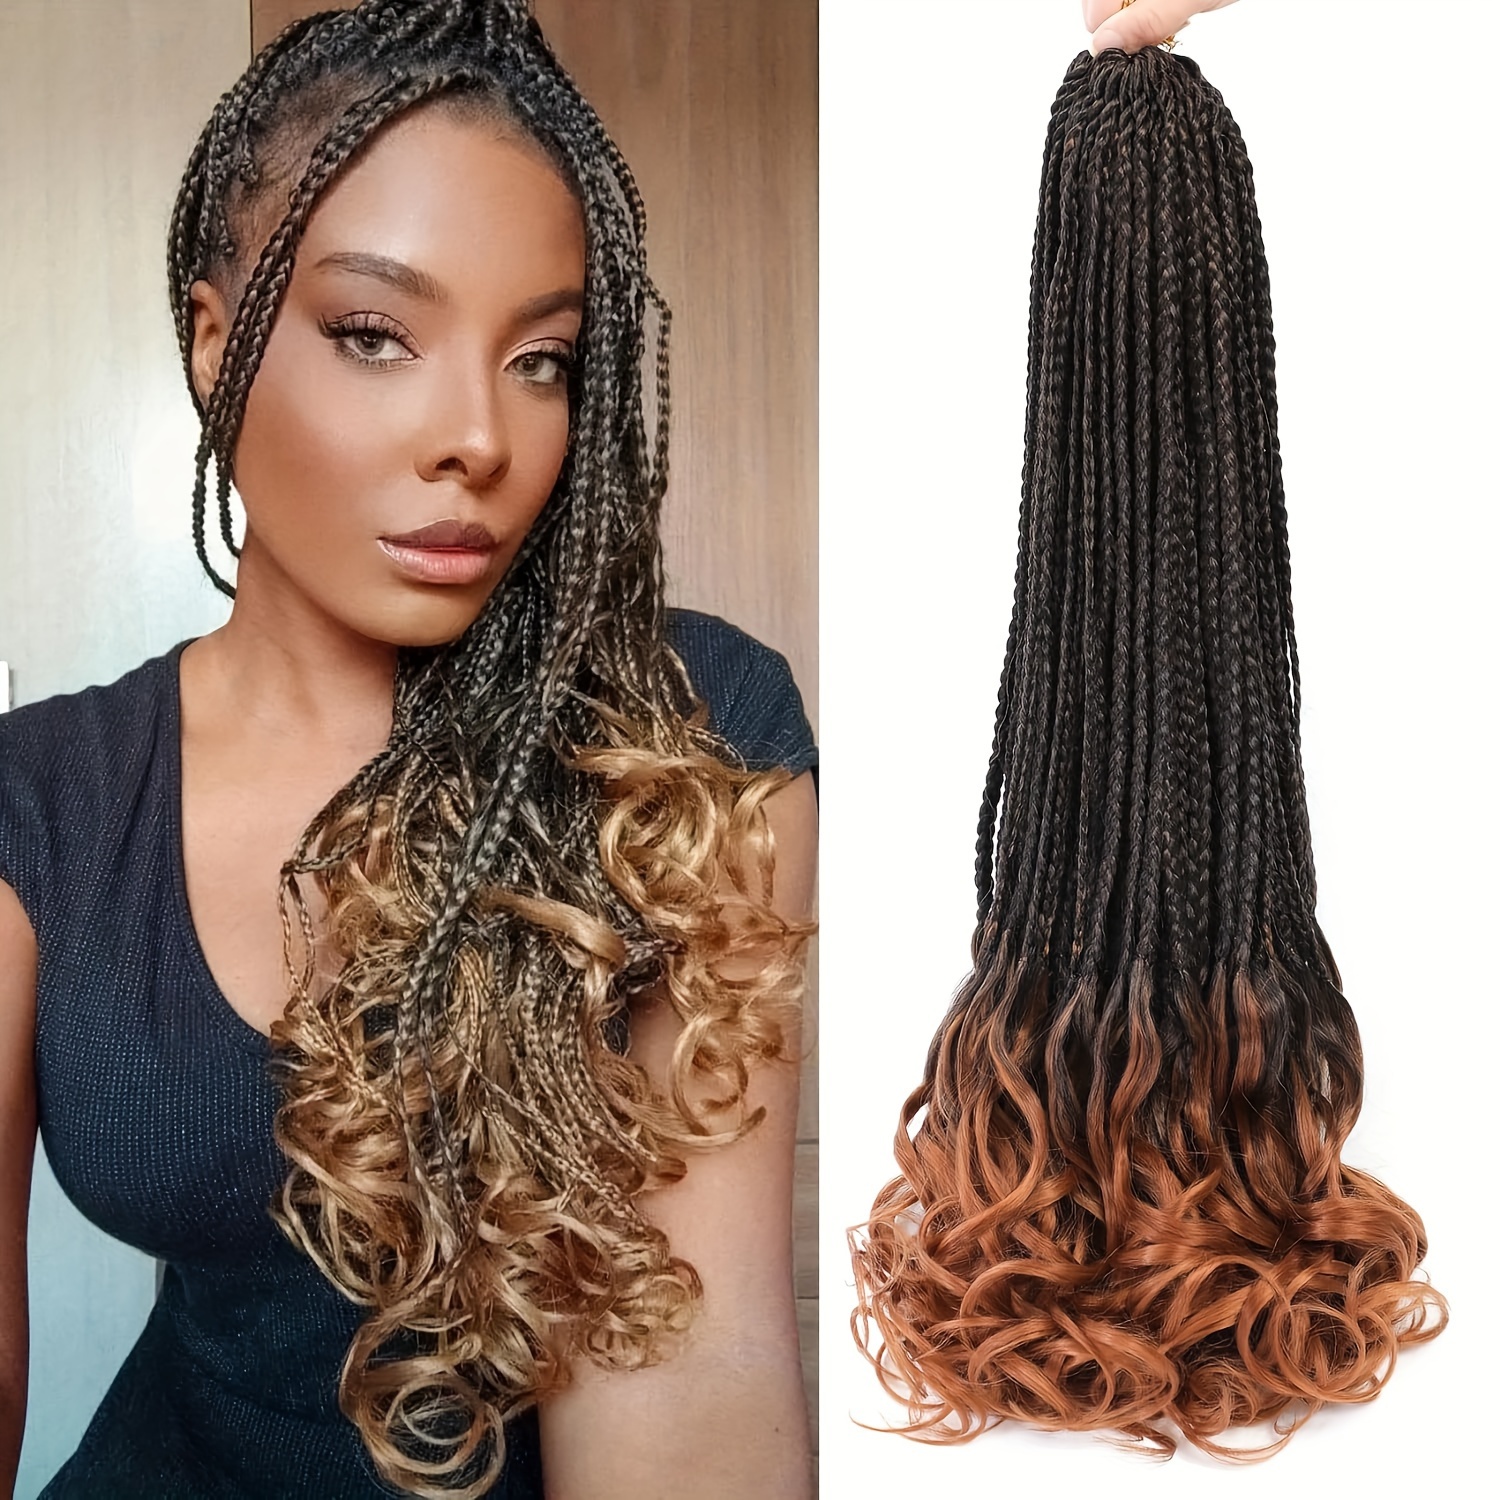 5 Roll Natural Black Brazilian Wool Hair Acrylic Yarn for African Synthetic Crochet Hair Jumbo Braids Senegalese Twisting Knitting Hair Braids Faux